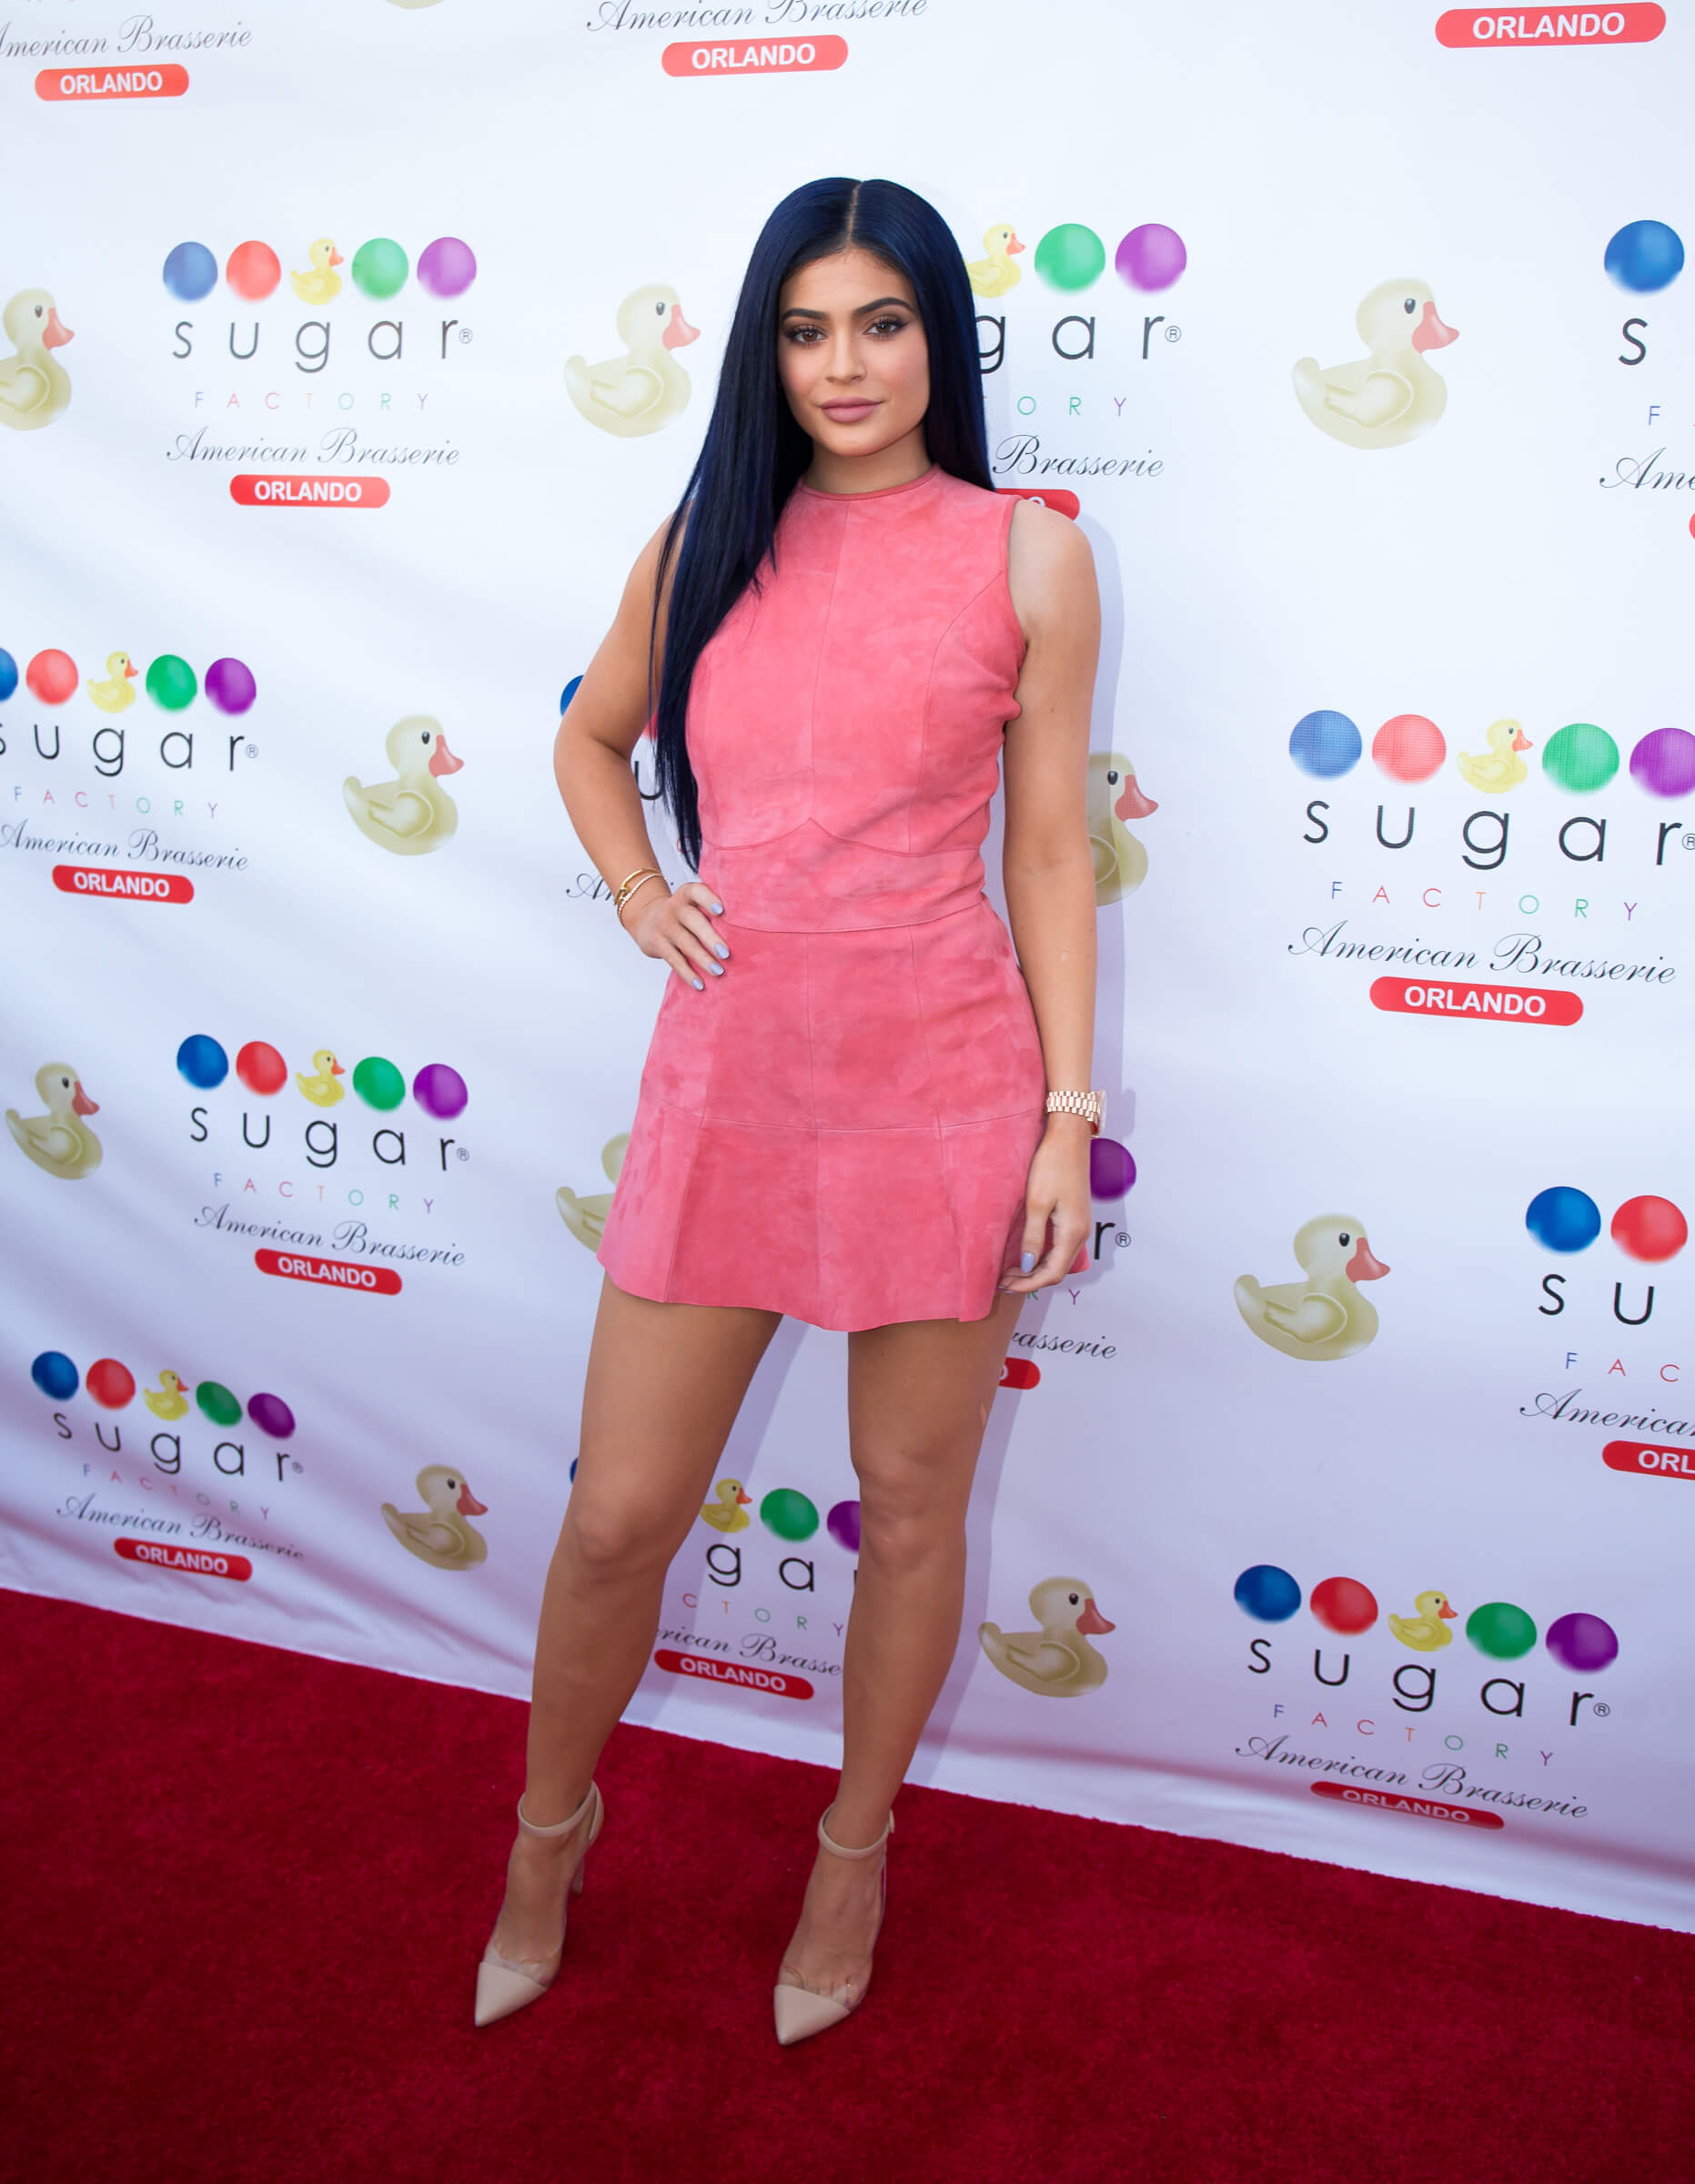 Kylie Jenner at Sugar Factory Orlando Grand Opening